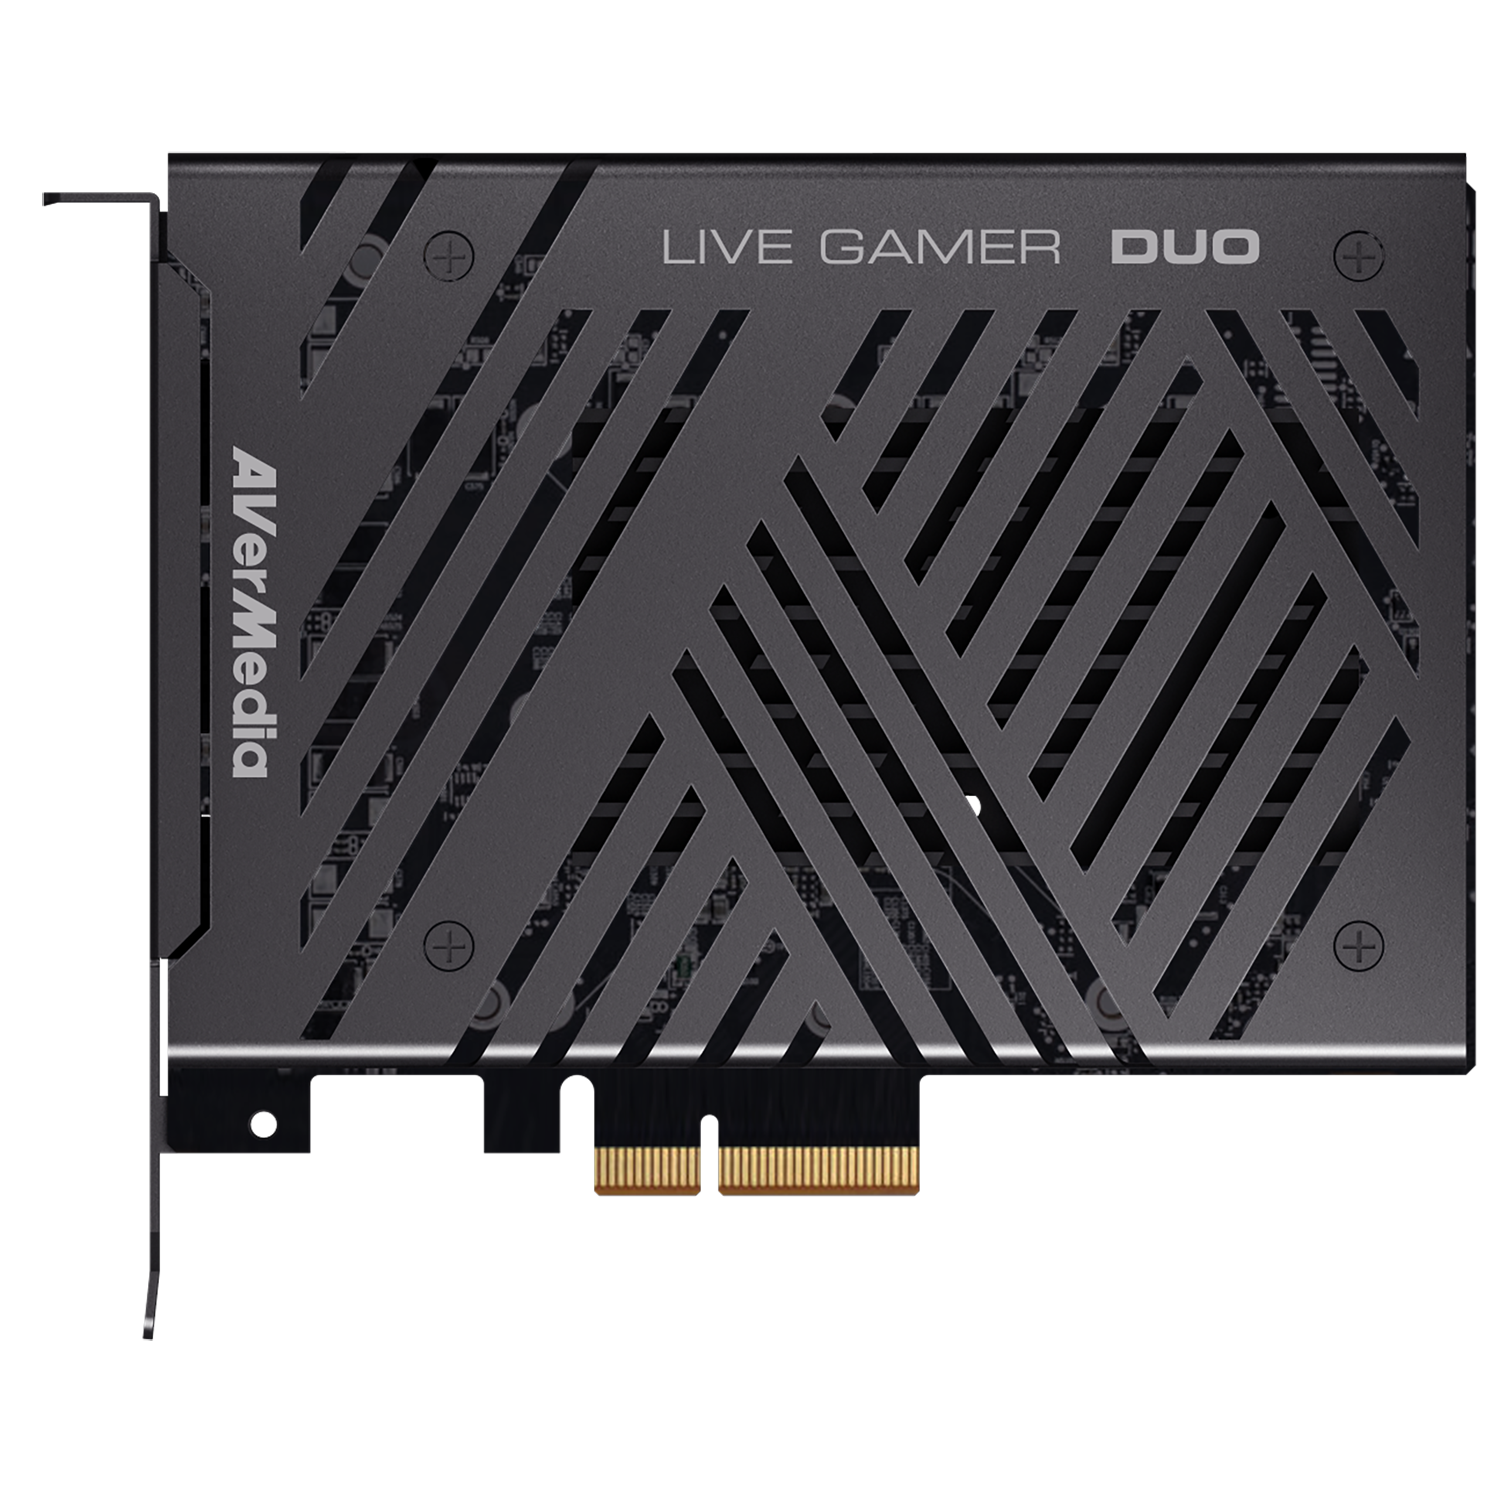 GC570D 4k60 HDR Internal Capture Card